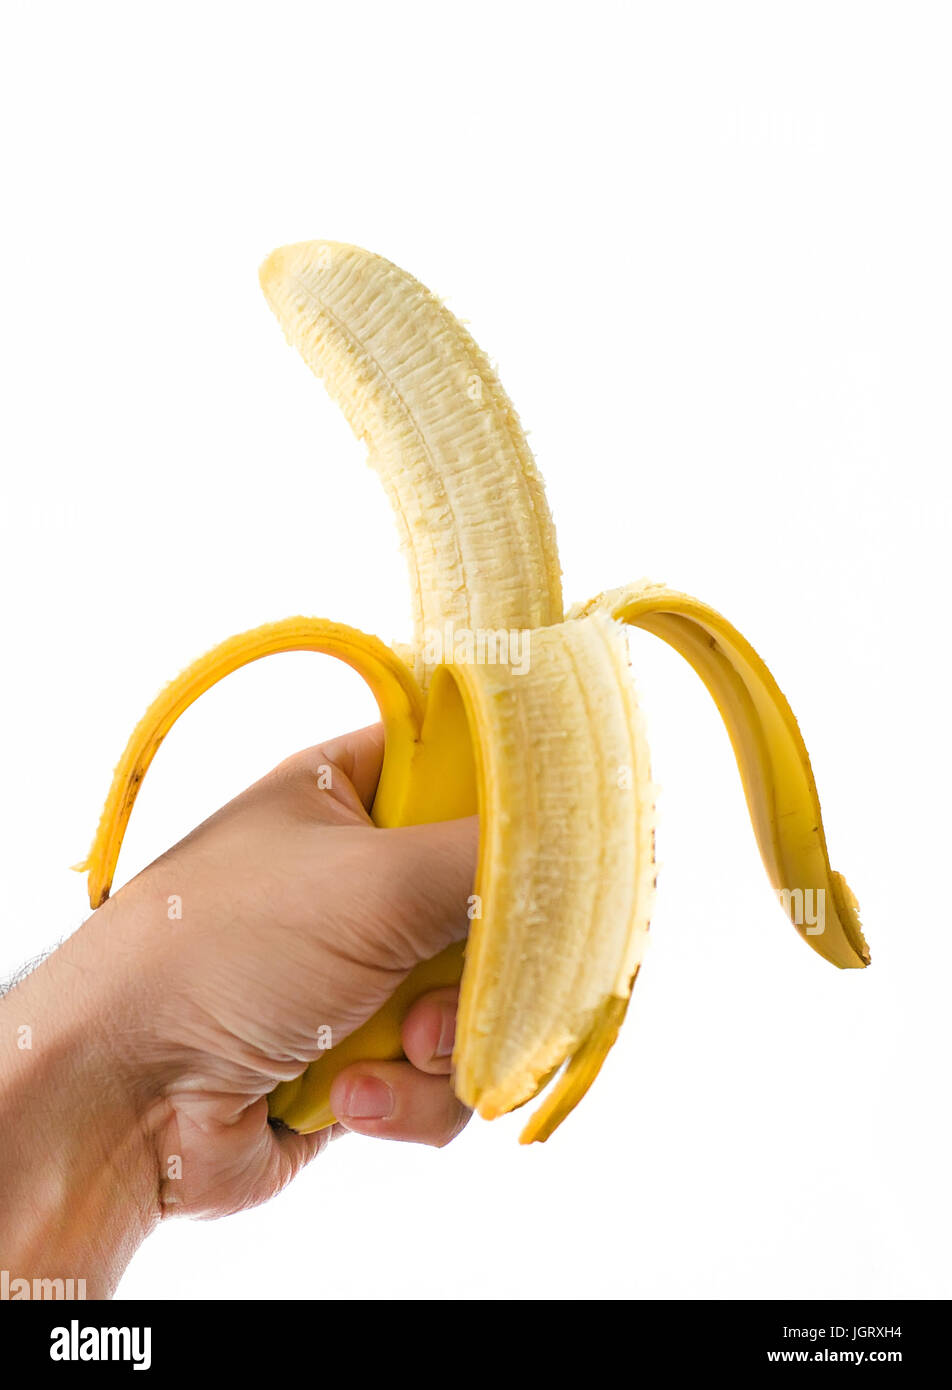 man hand holding banana isolated over white background Stock Photo